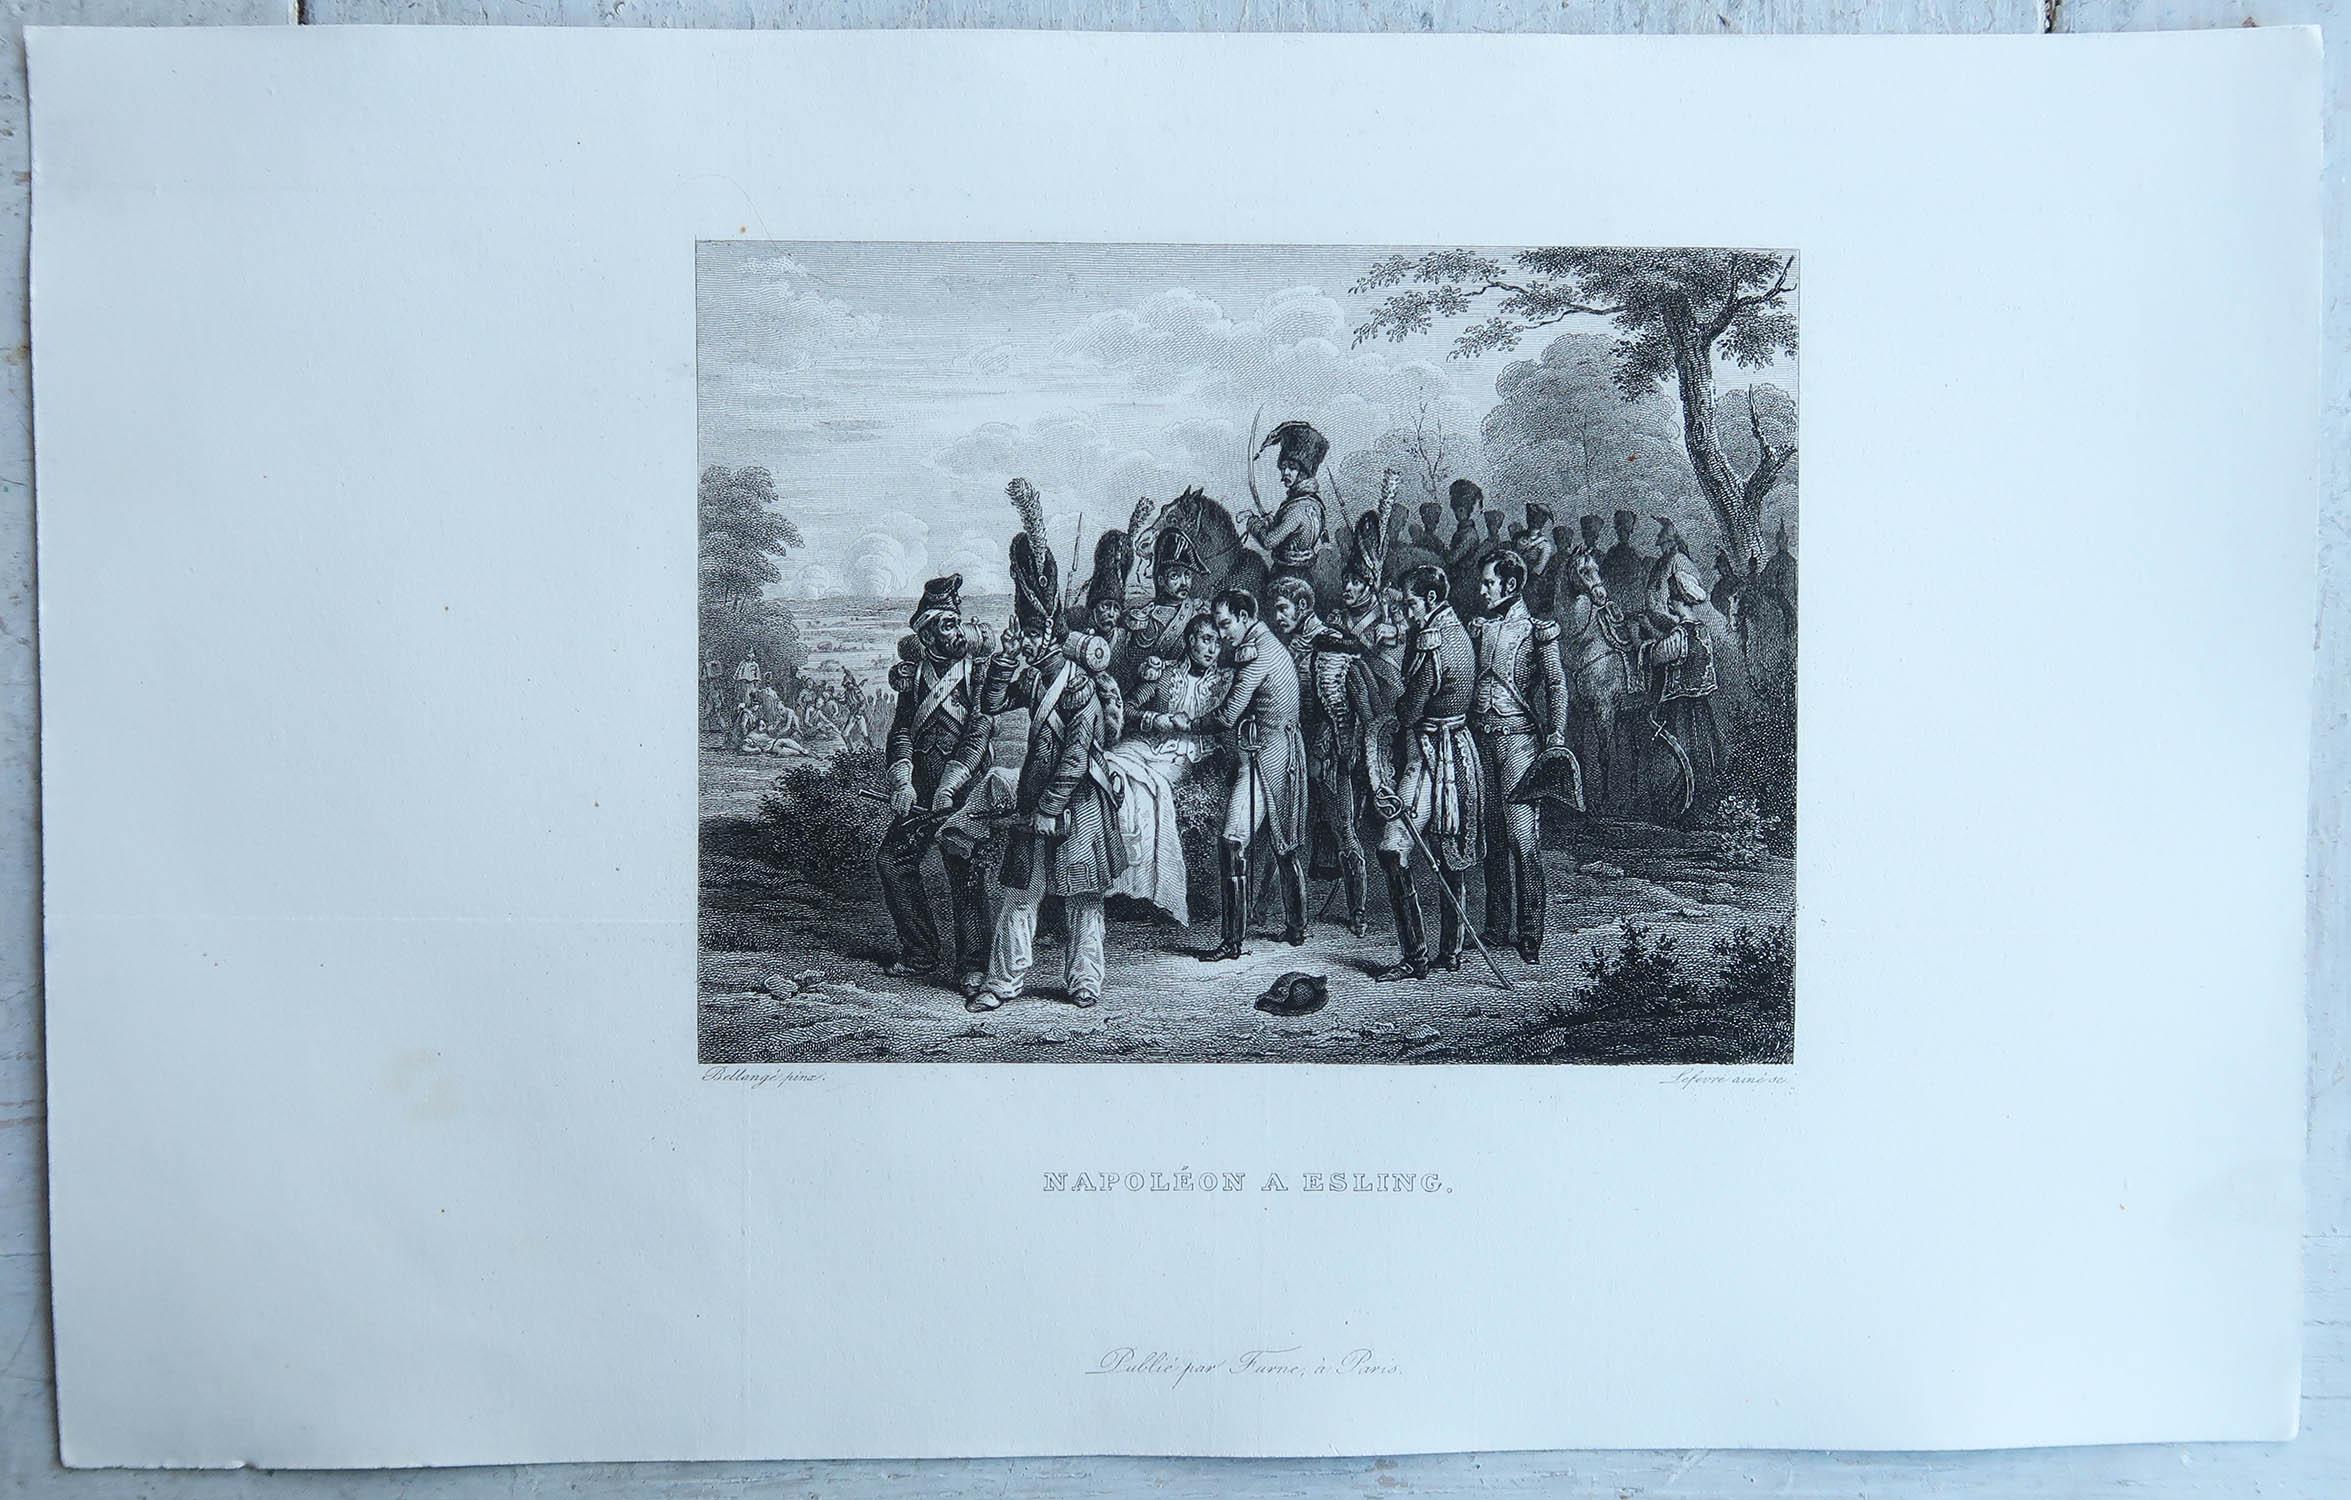 Other Original Antique Print of Napoleon Bonaparte - Aspern-Essling. Circa 1850